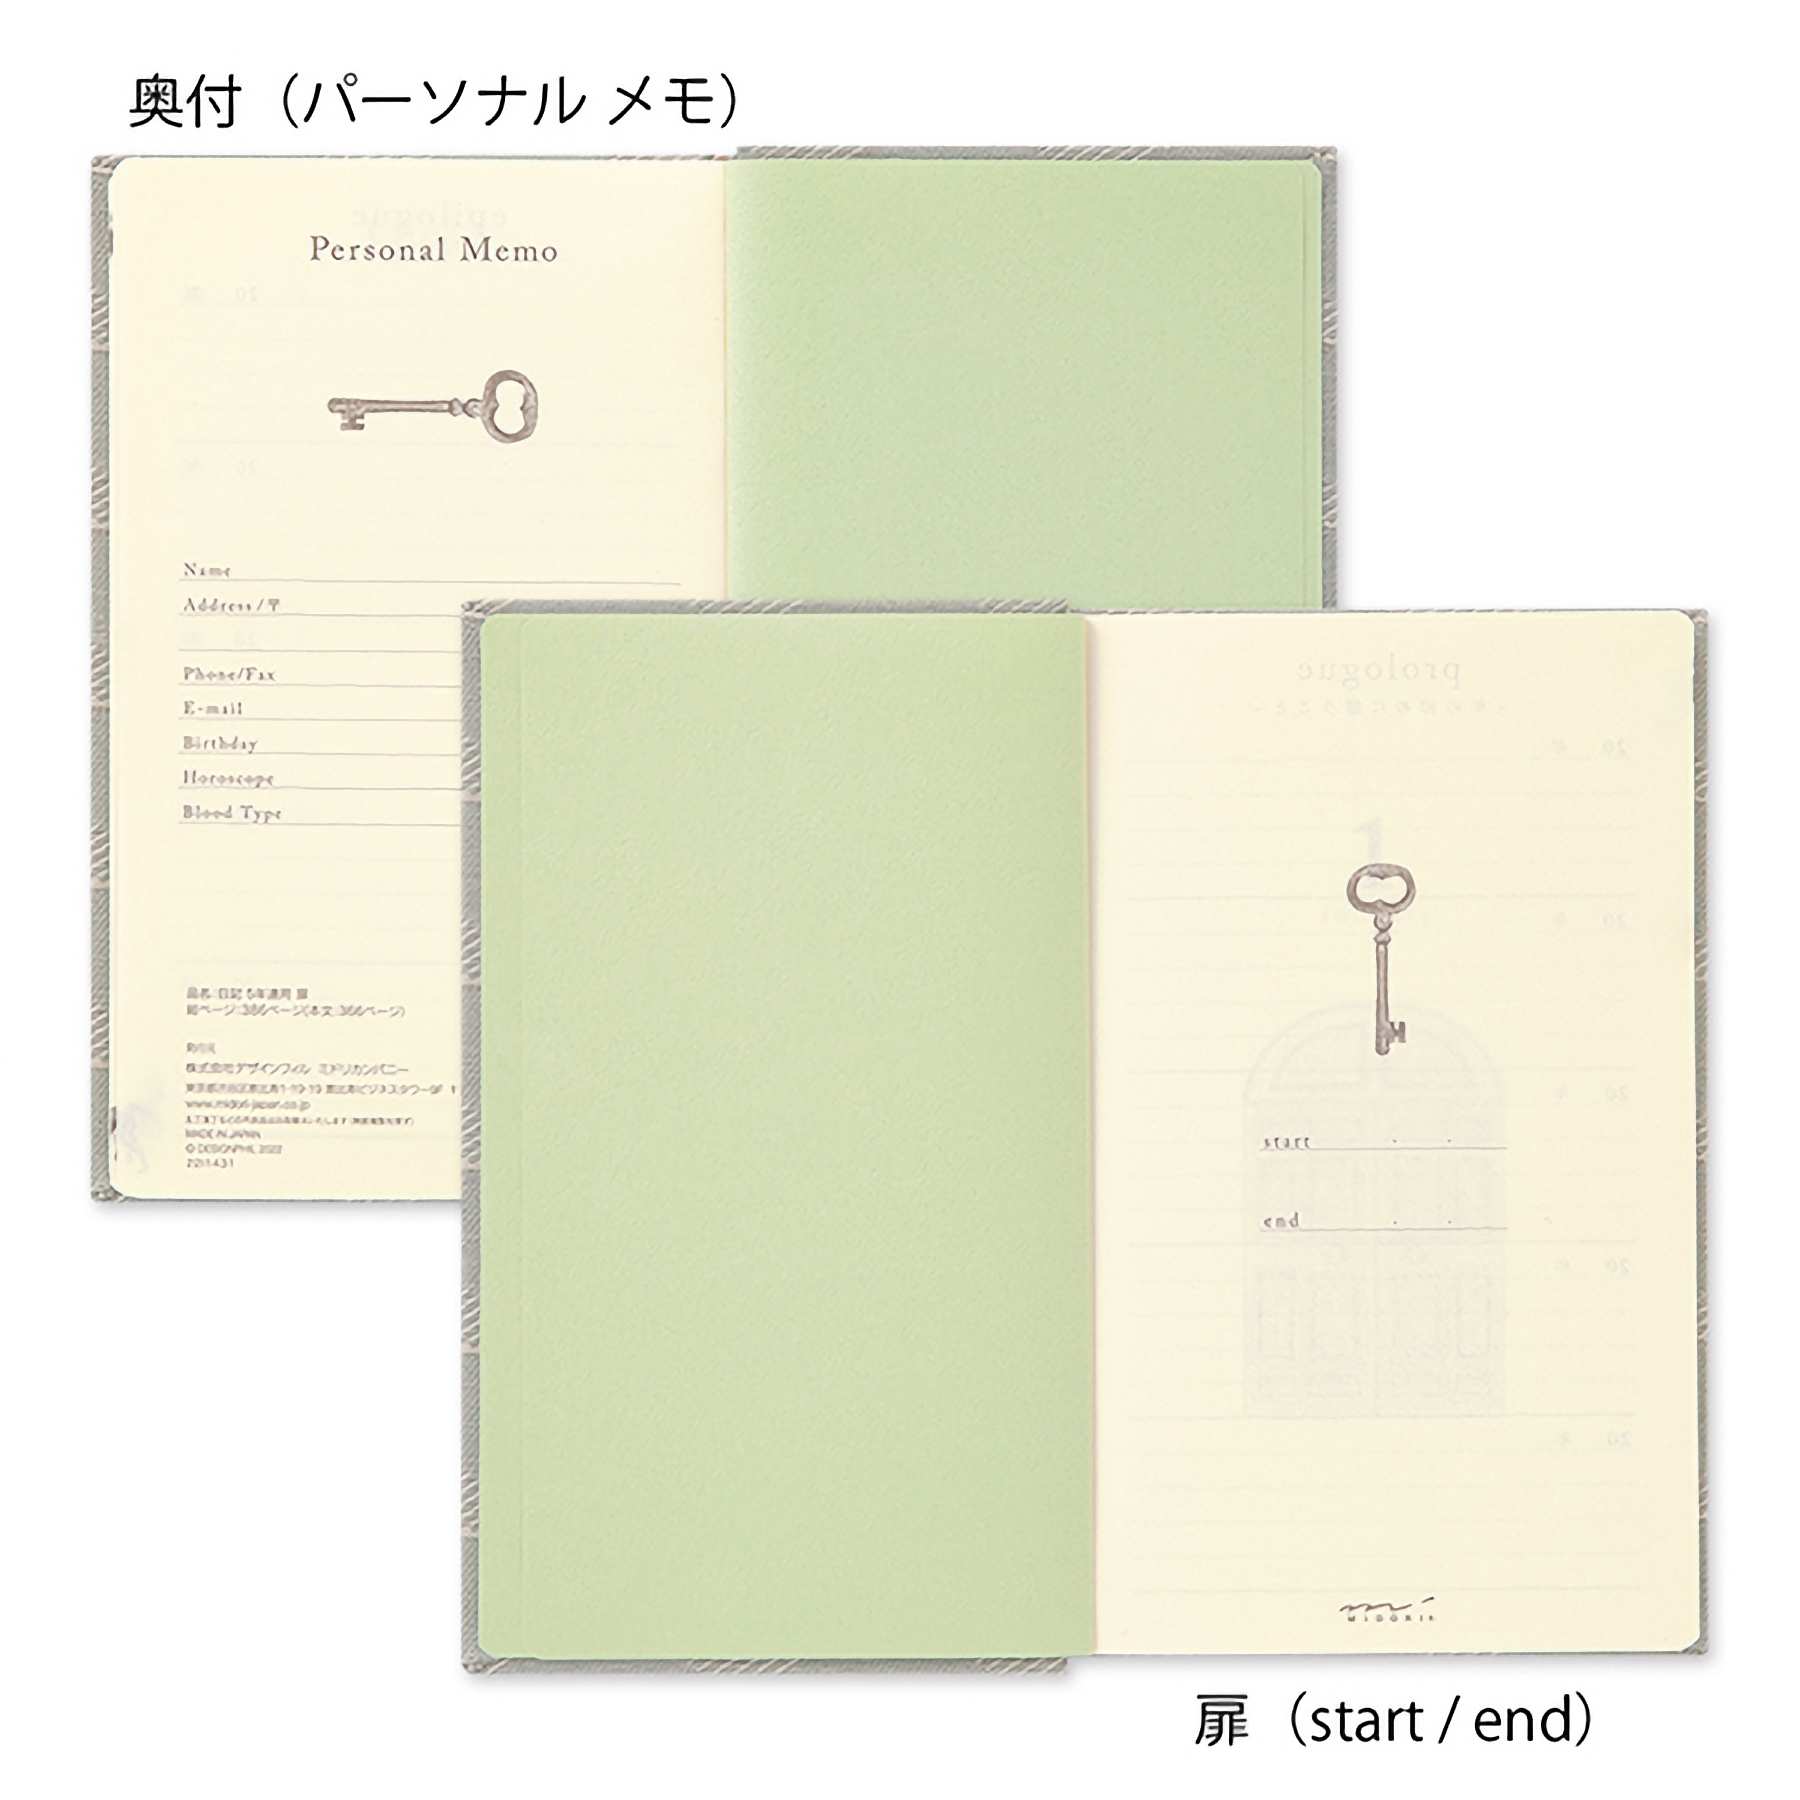 Midori 5 Years Diary Gate Kyo-ori Grey & White Limited Edition